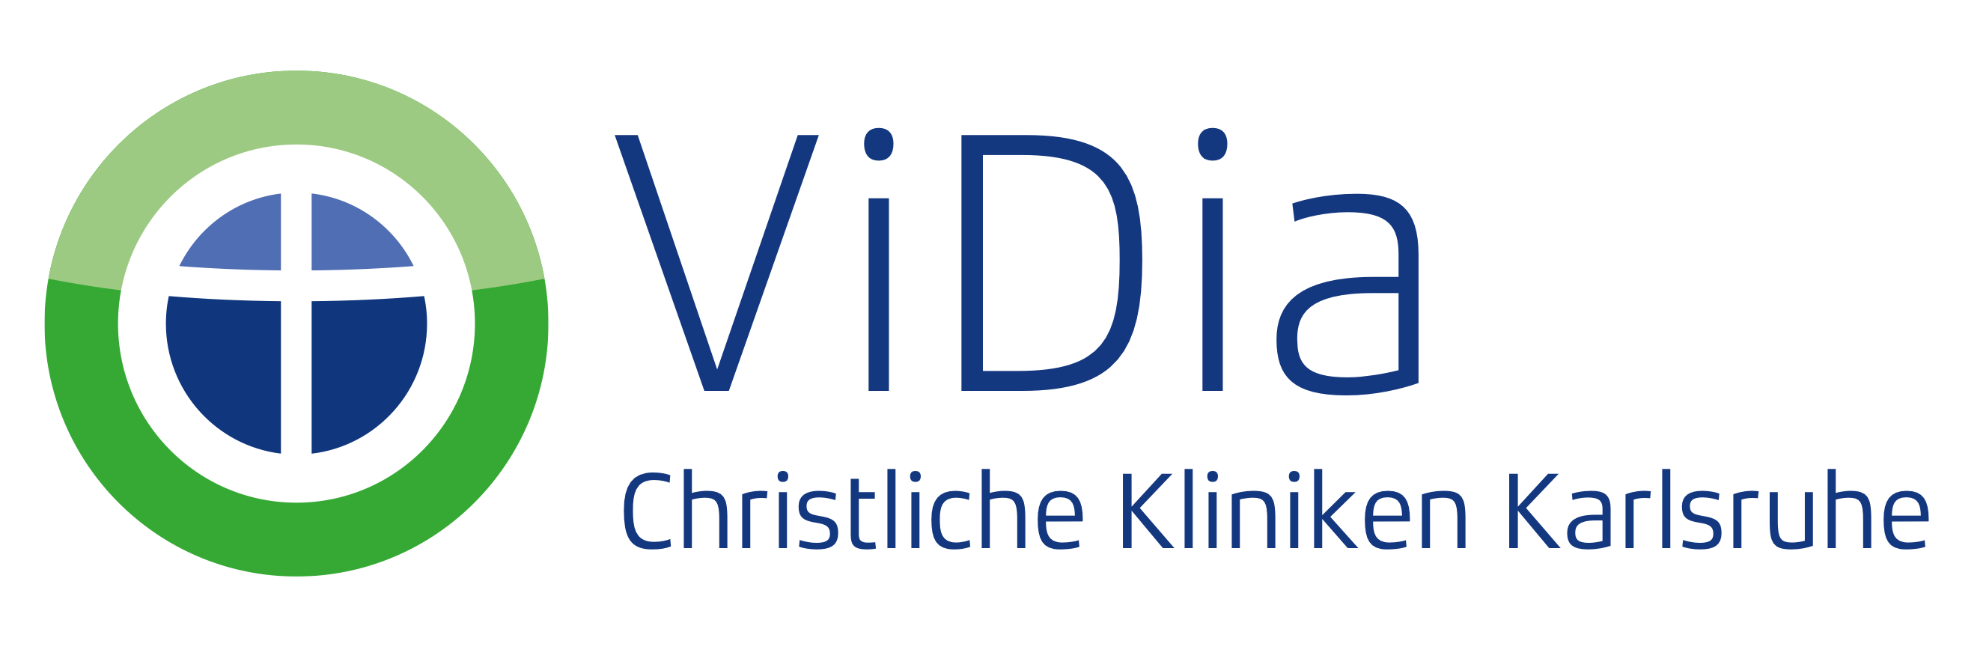 Vidia Christliche Kliniken Karlsruhe - Logo